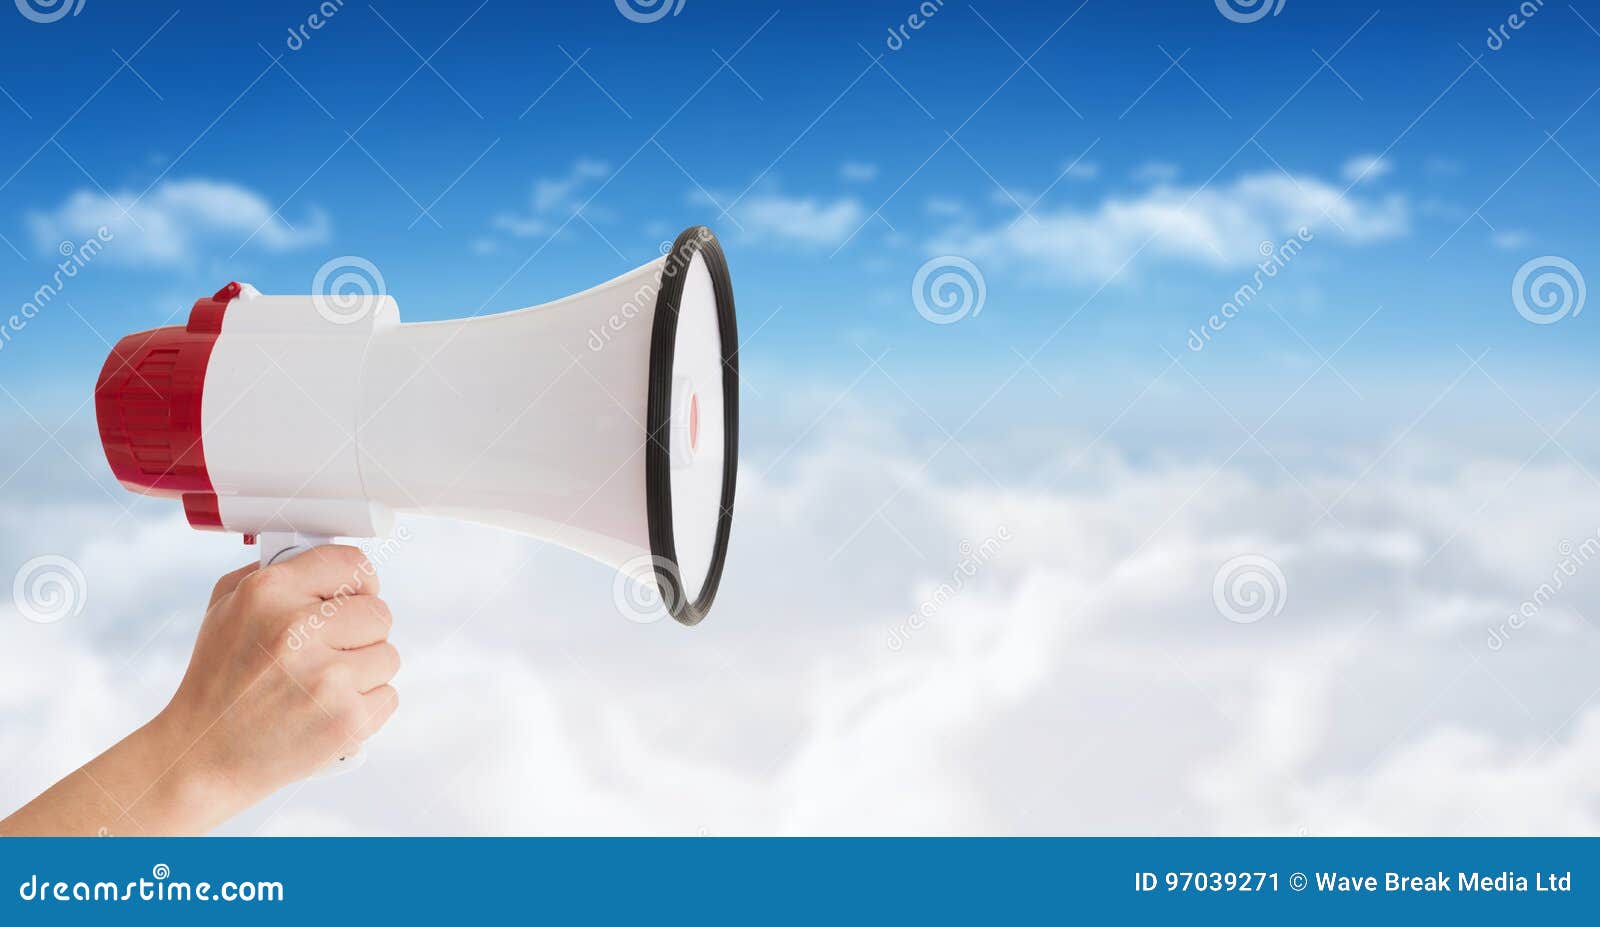 hand holding loud speaker in front of sky